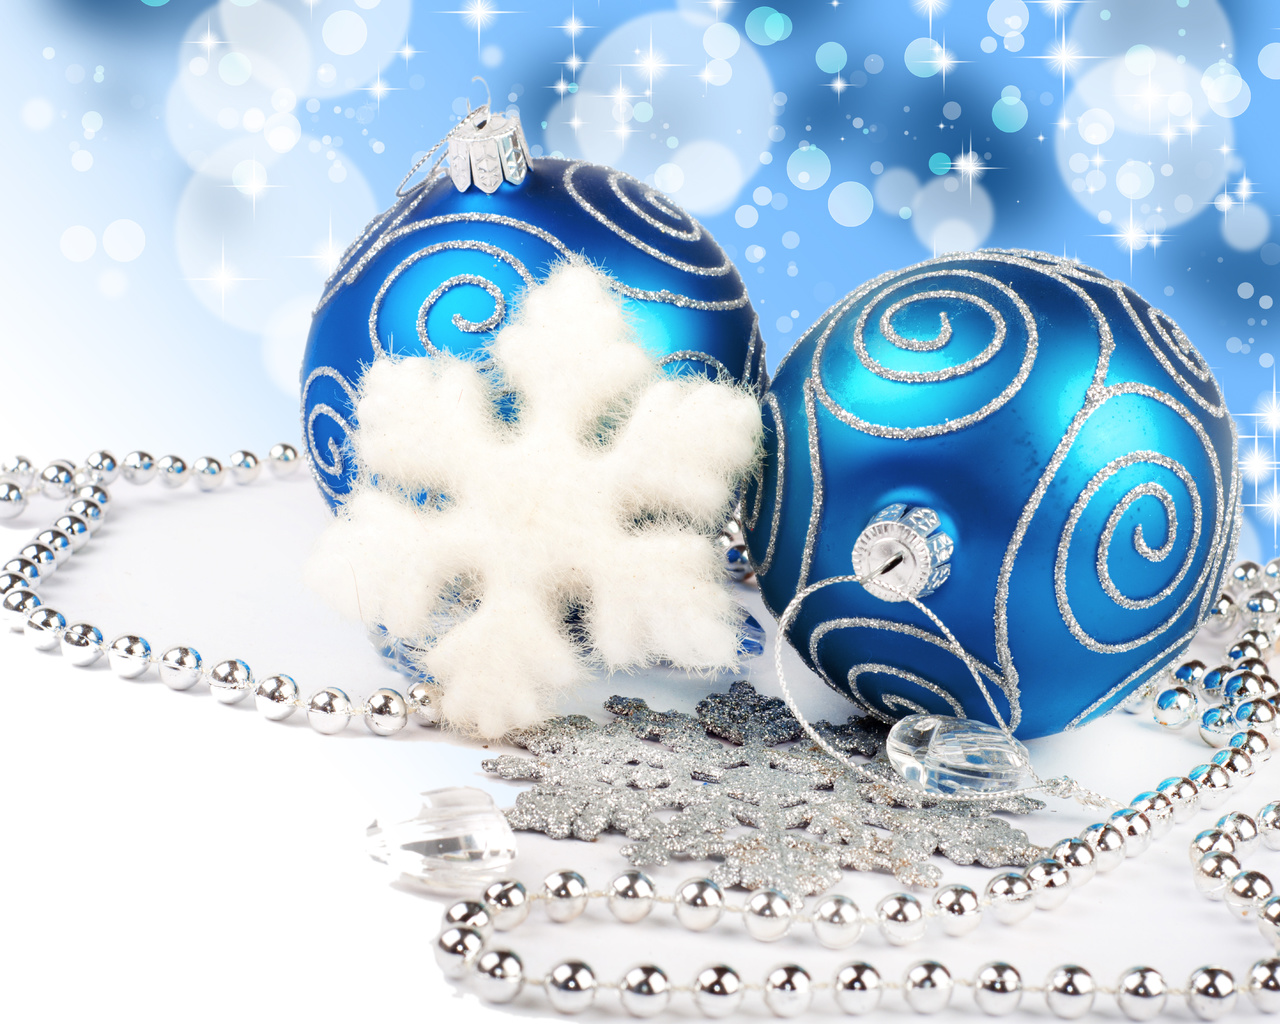 diamonds, blue balls, necklace, new year, Merry christmas, jewelry, lights, bokeh, decoration